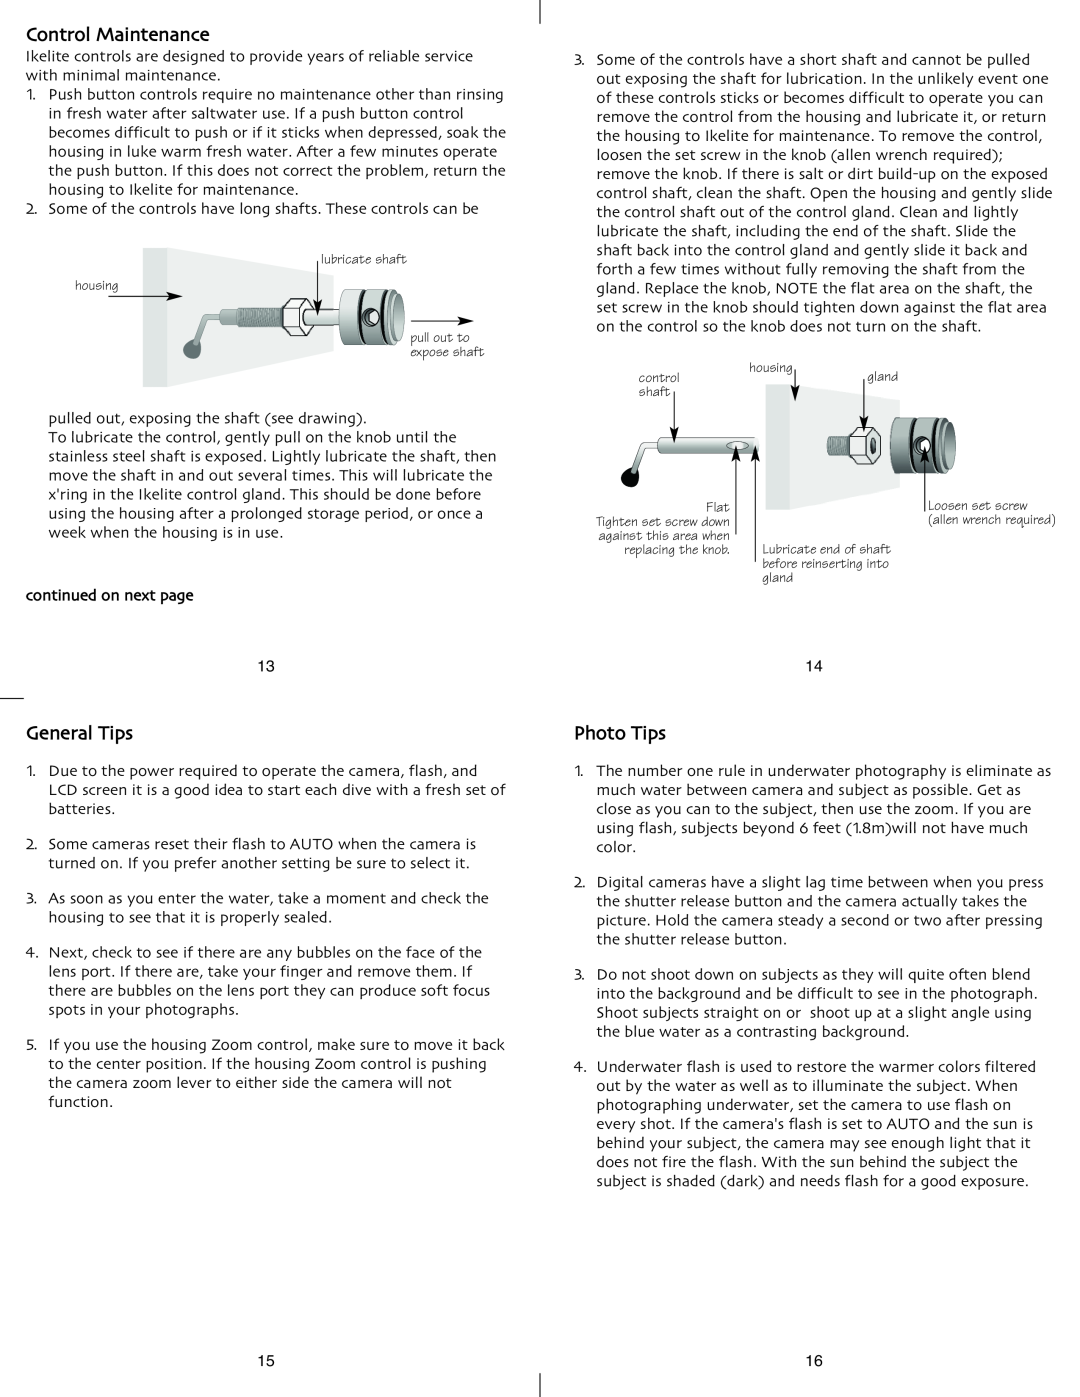 Ikelite Stylus 760, Mju760 instruction manual Control Maintenance, General Tips, Photo Tips 